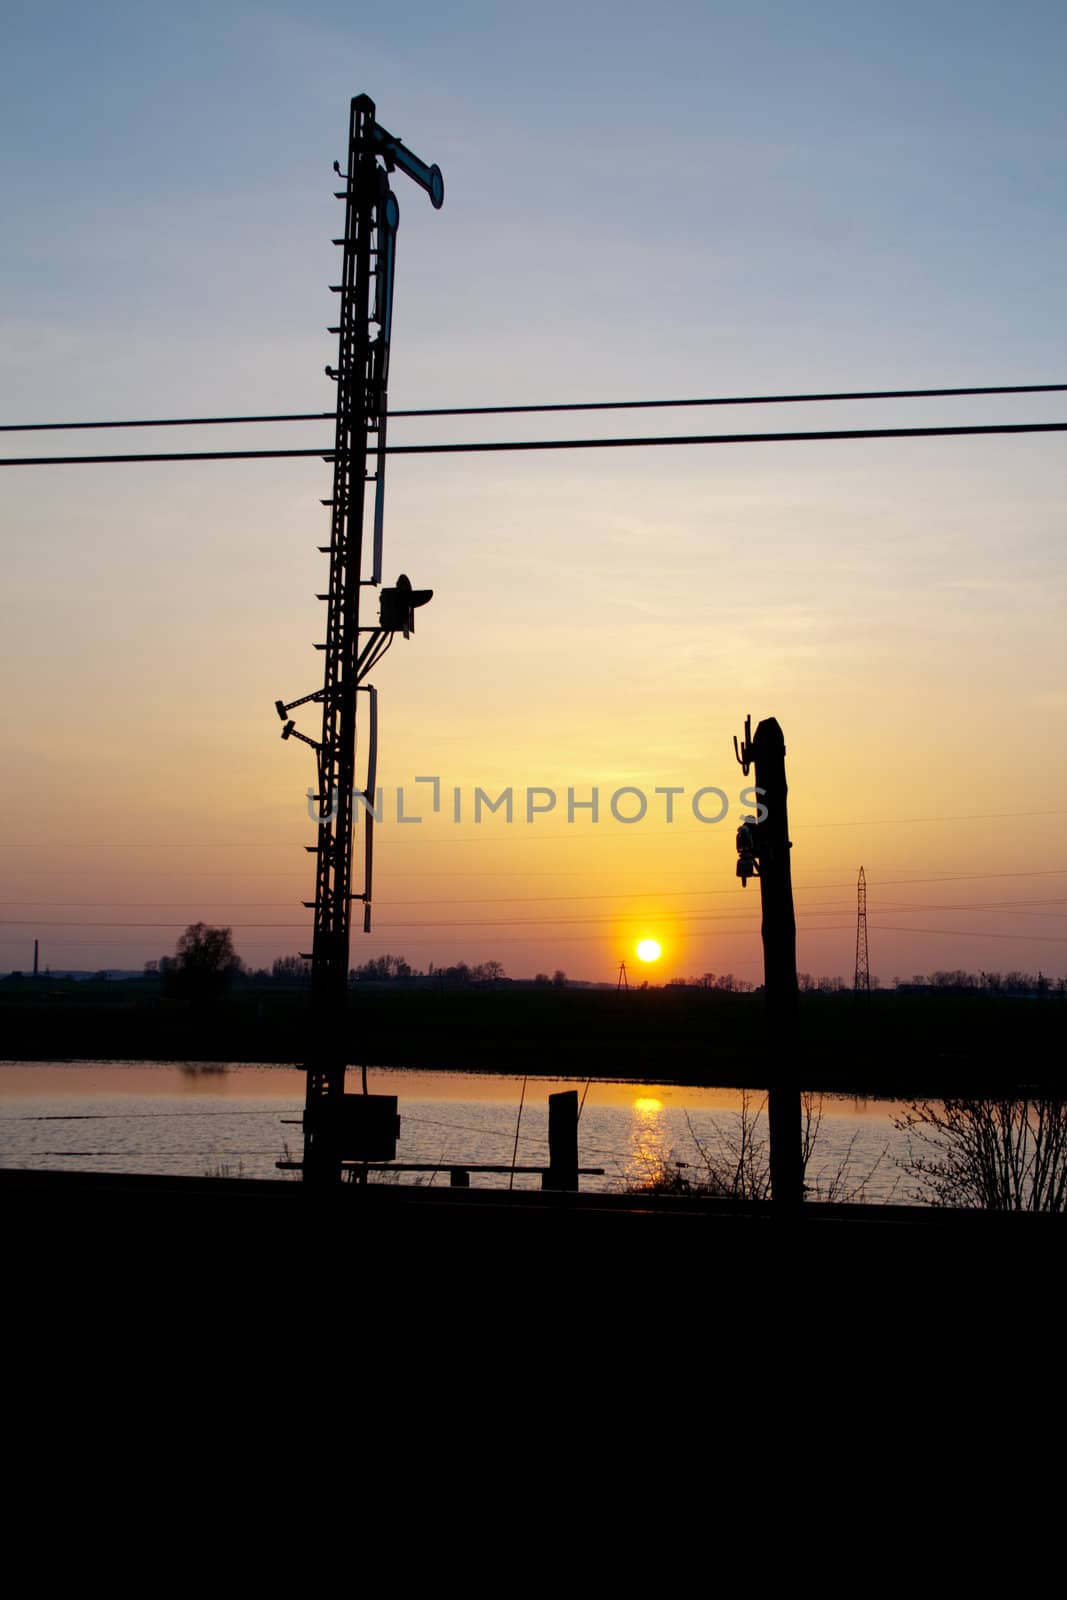 Railway semaphore silhouette during the sunset
